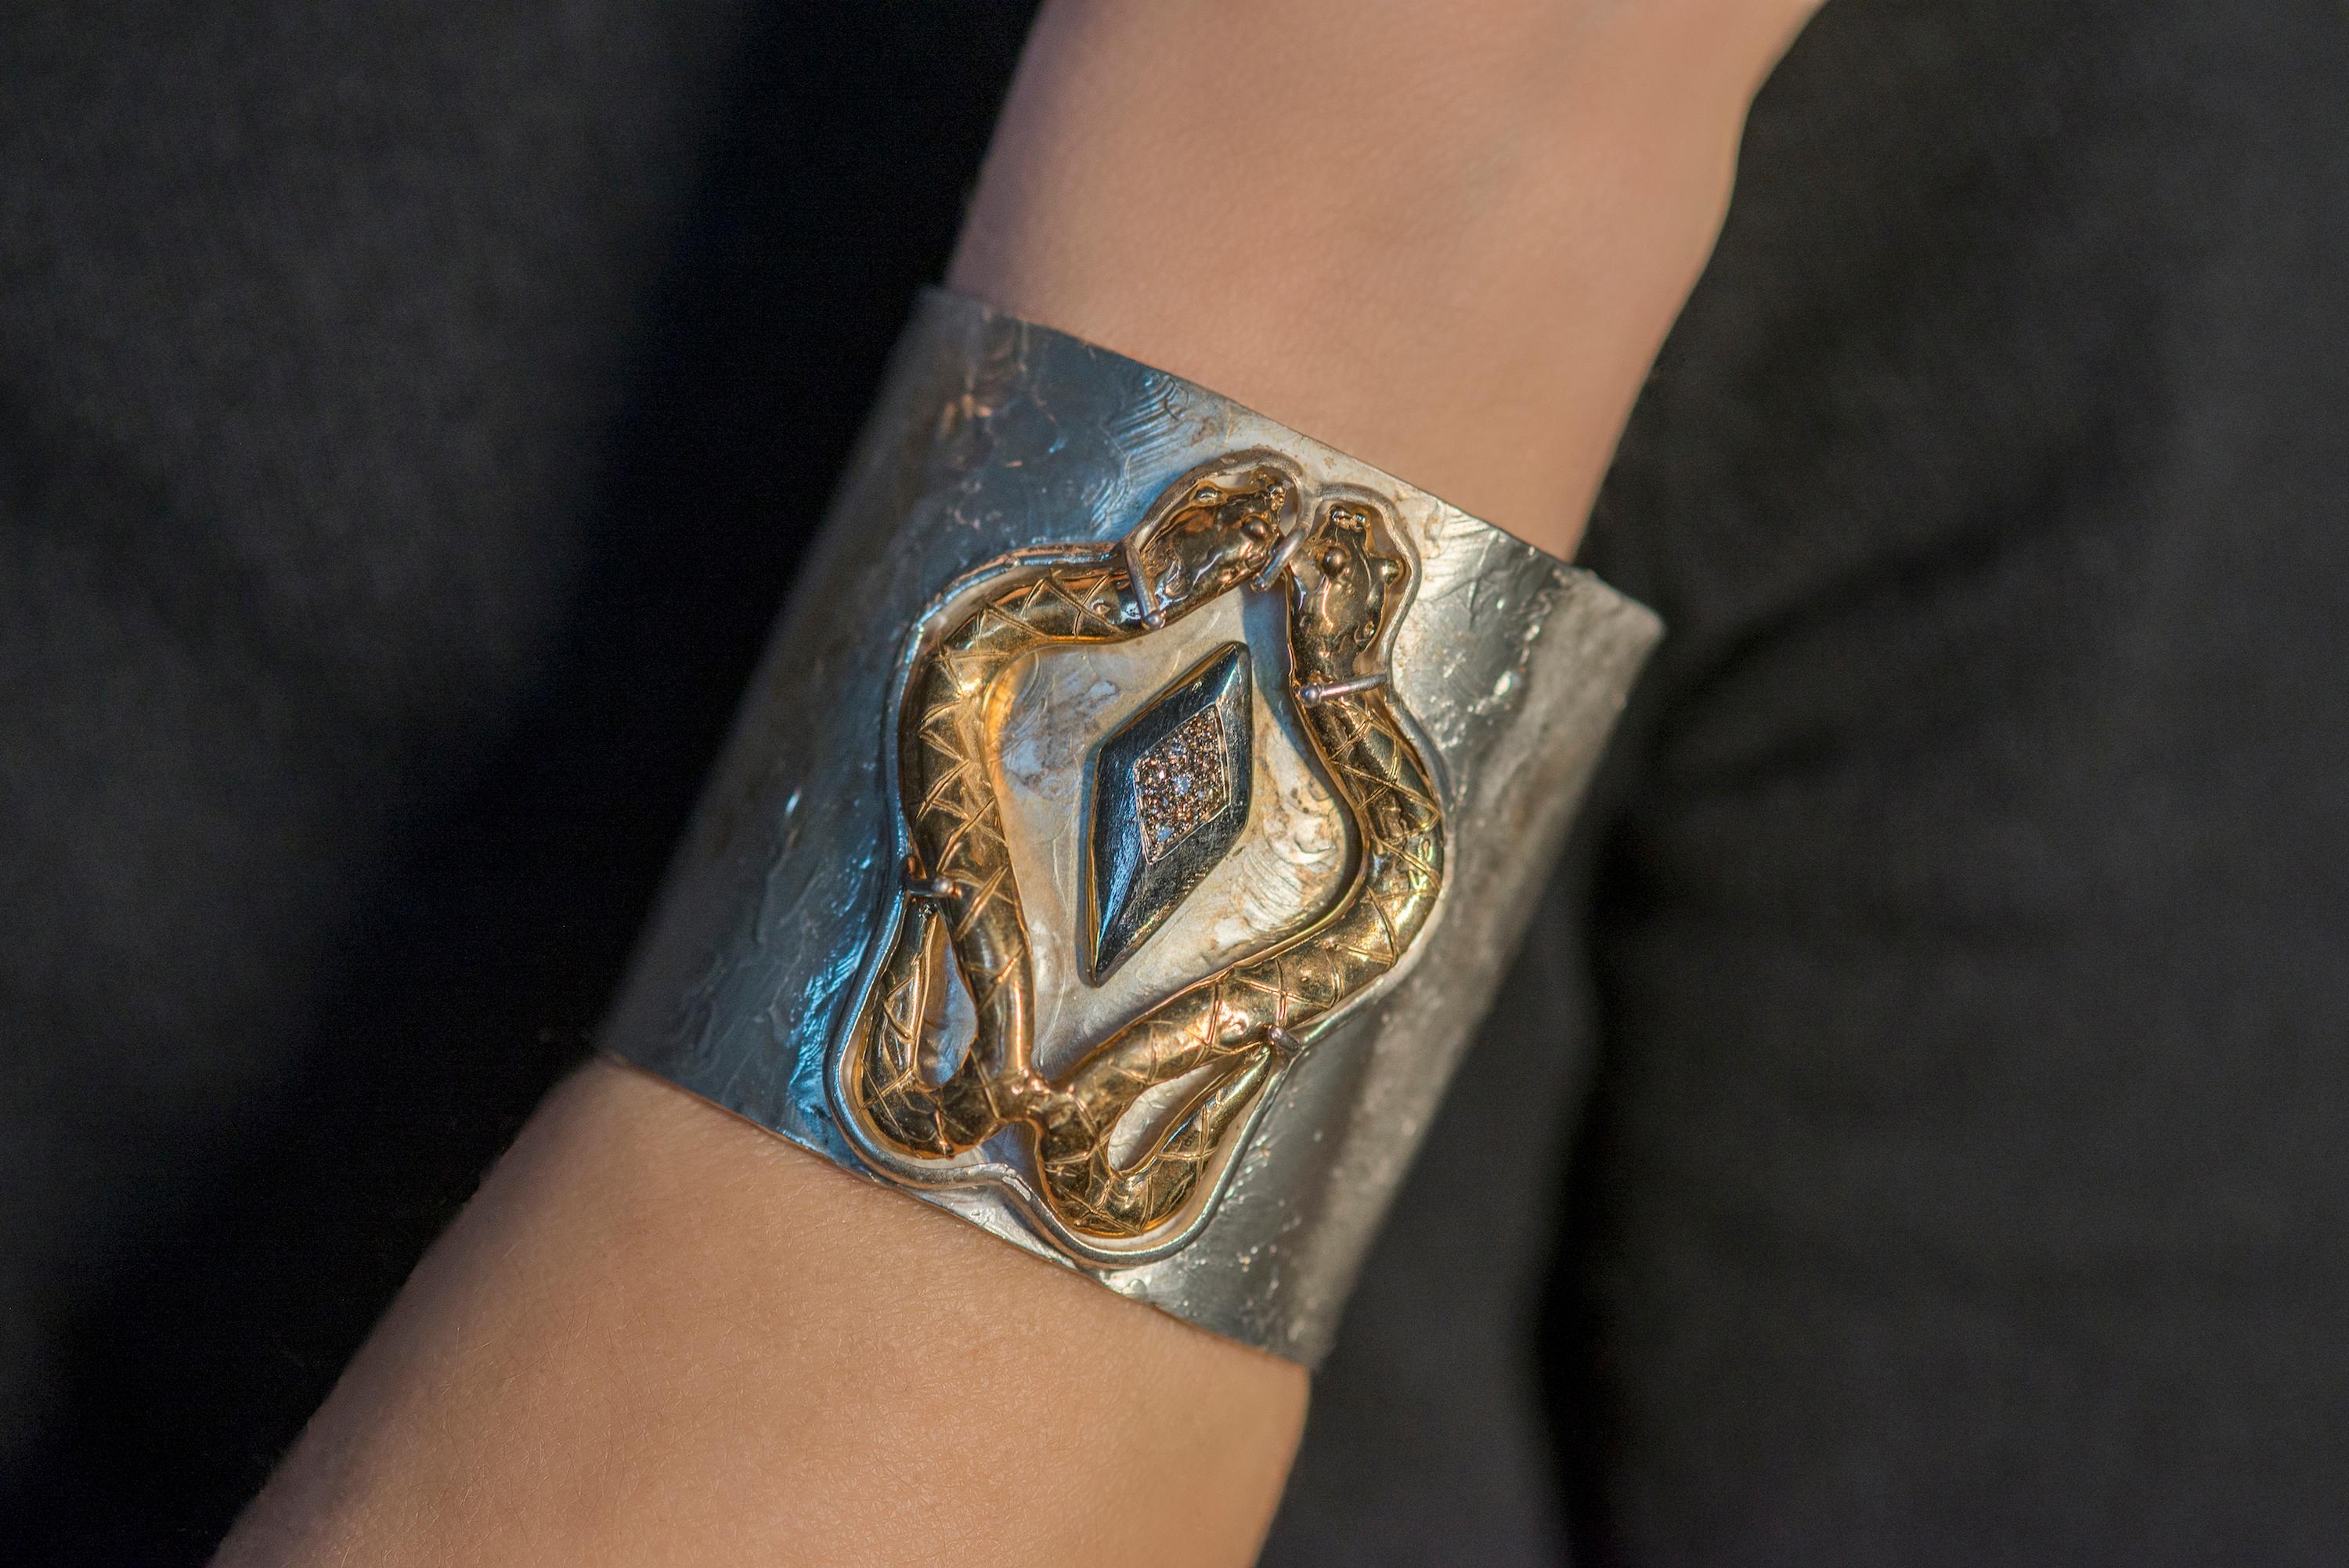 gold snake bracelet